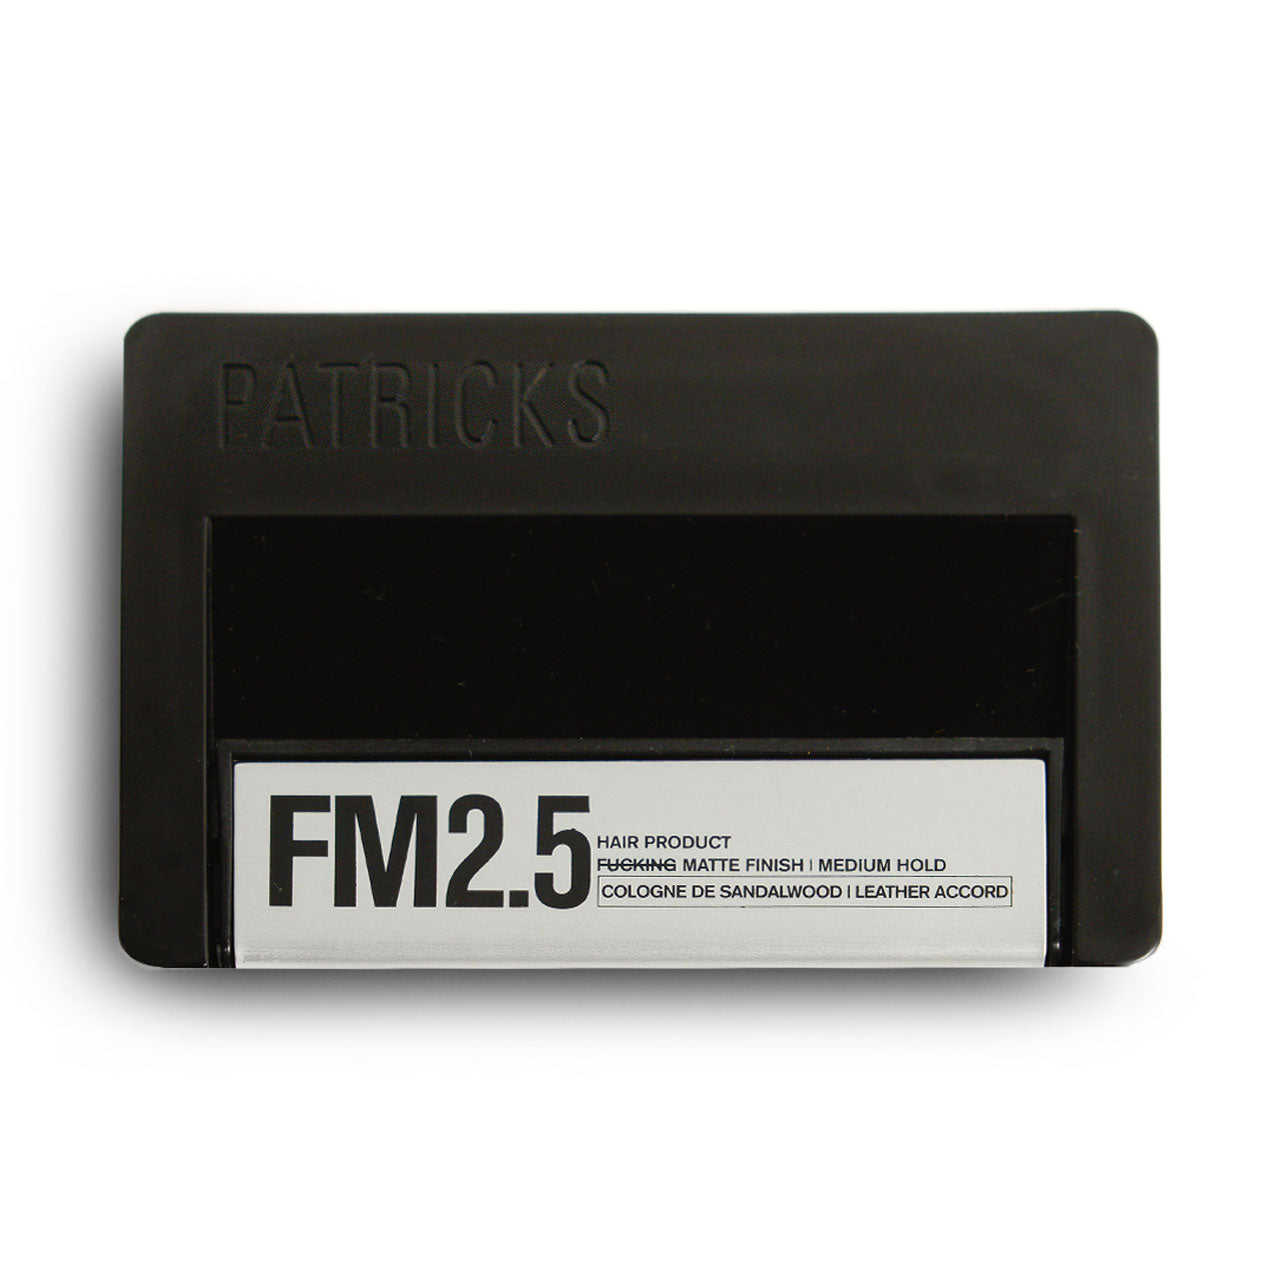 Patricks 2.5 F-cking Matte Styling Product